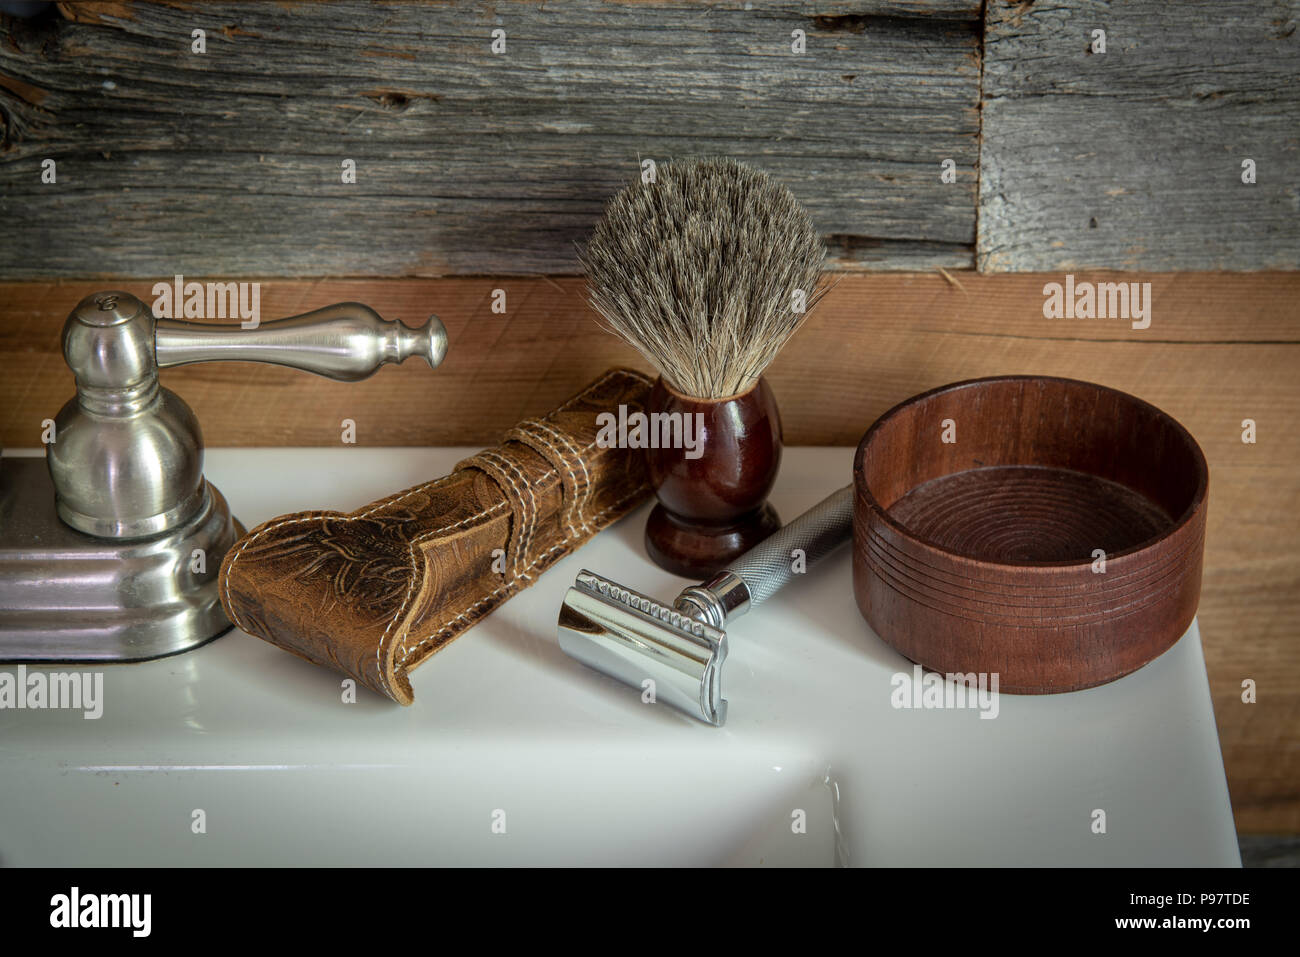 Vintage double-edged razor shaving kit Stock Photo